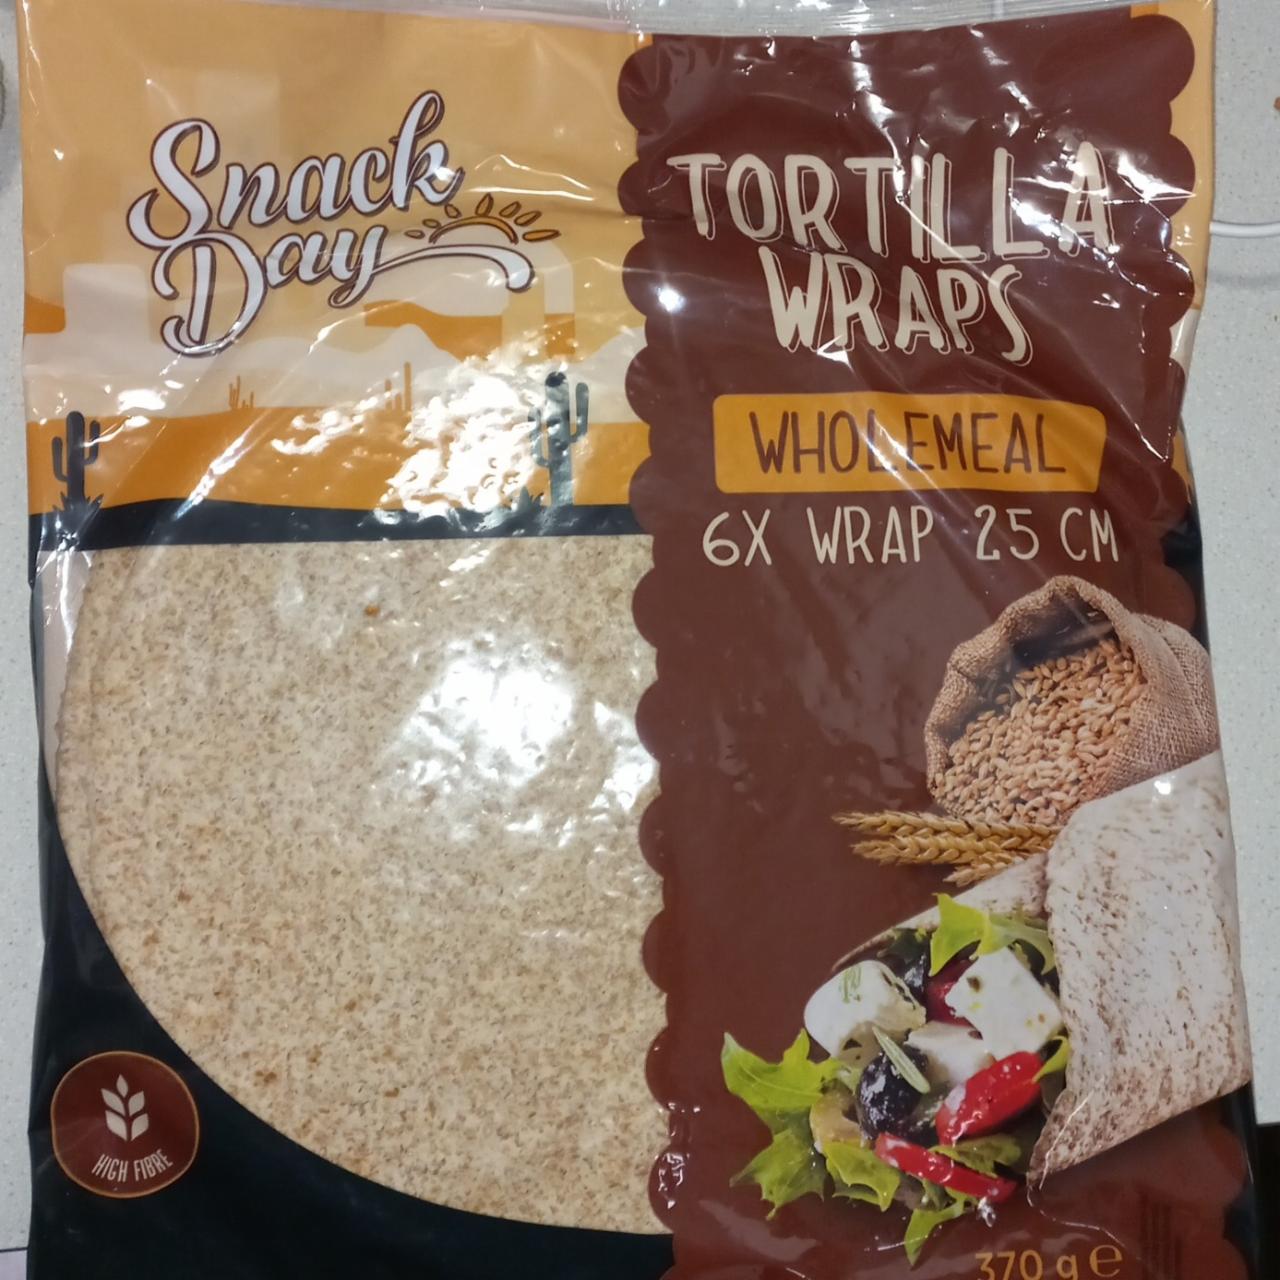 Képek - Tortilla Wraps Wholemeal Snack day